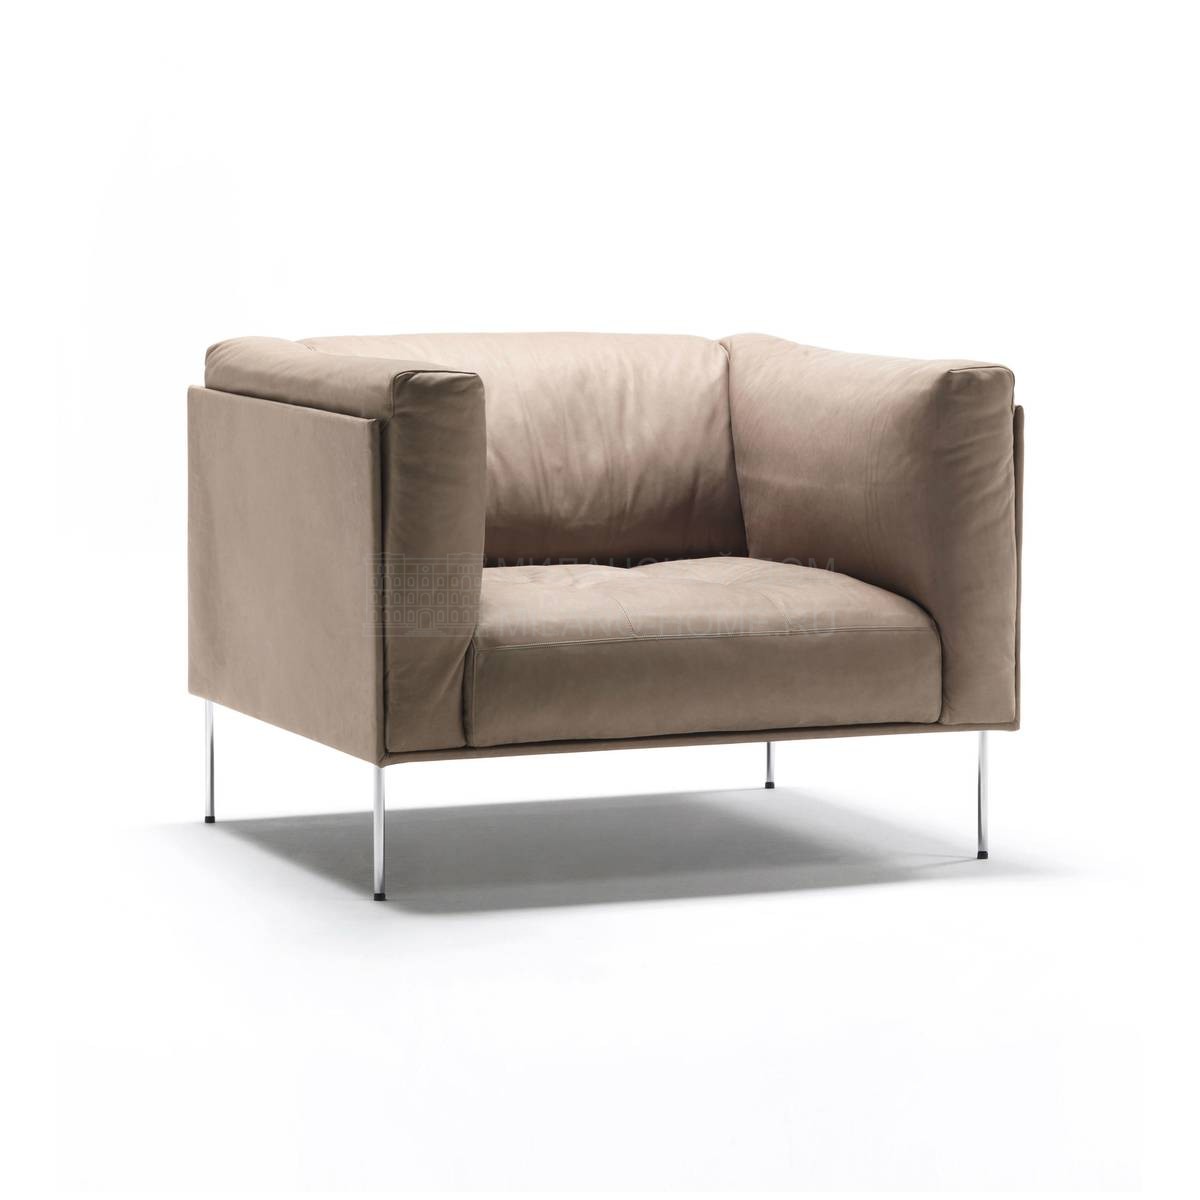 Кресло Rod armchair из Италии фабрики LIVING DIVANI